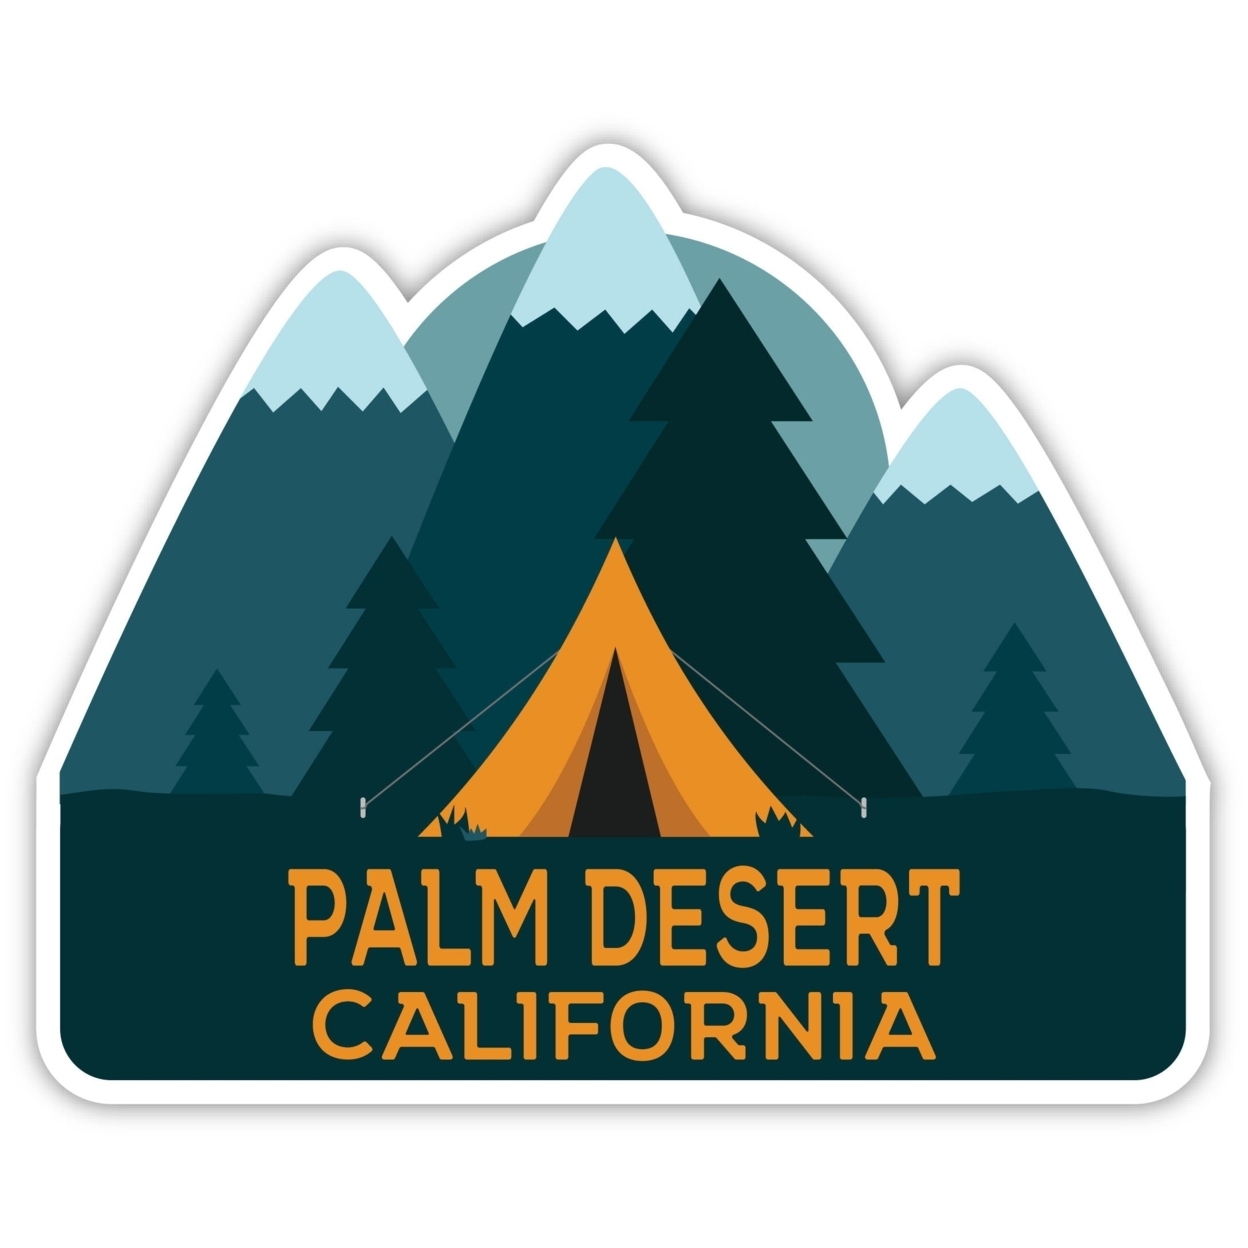 Palm Desert California Souvenir Decorative Stickers (Choose Theme And Size) - Single Unit, 2-Inch, Bear